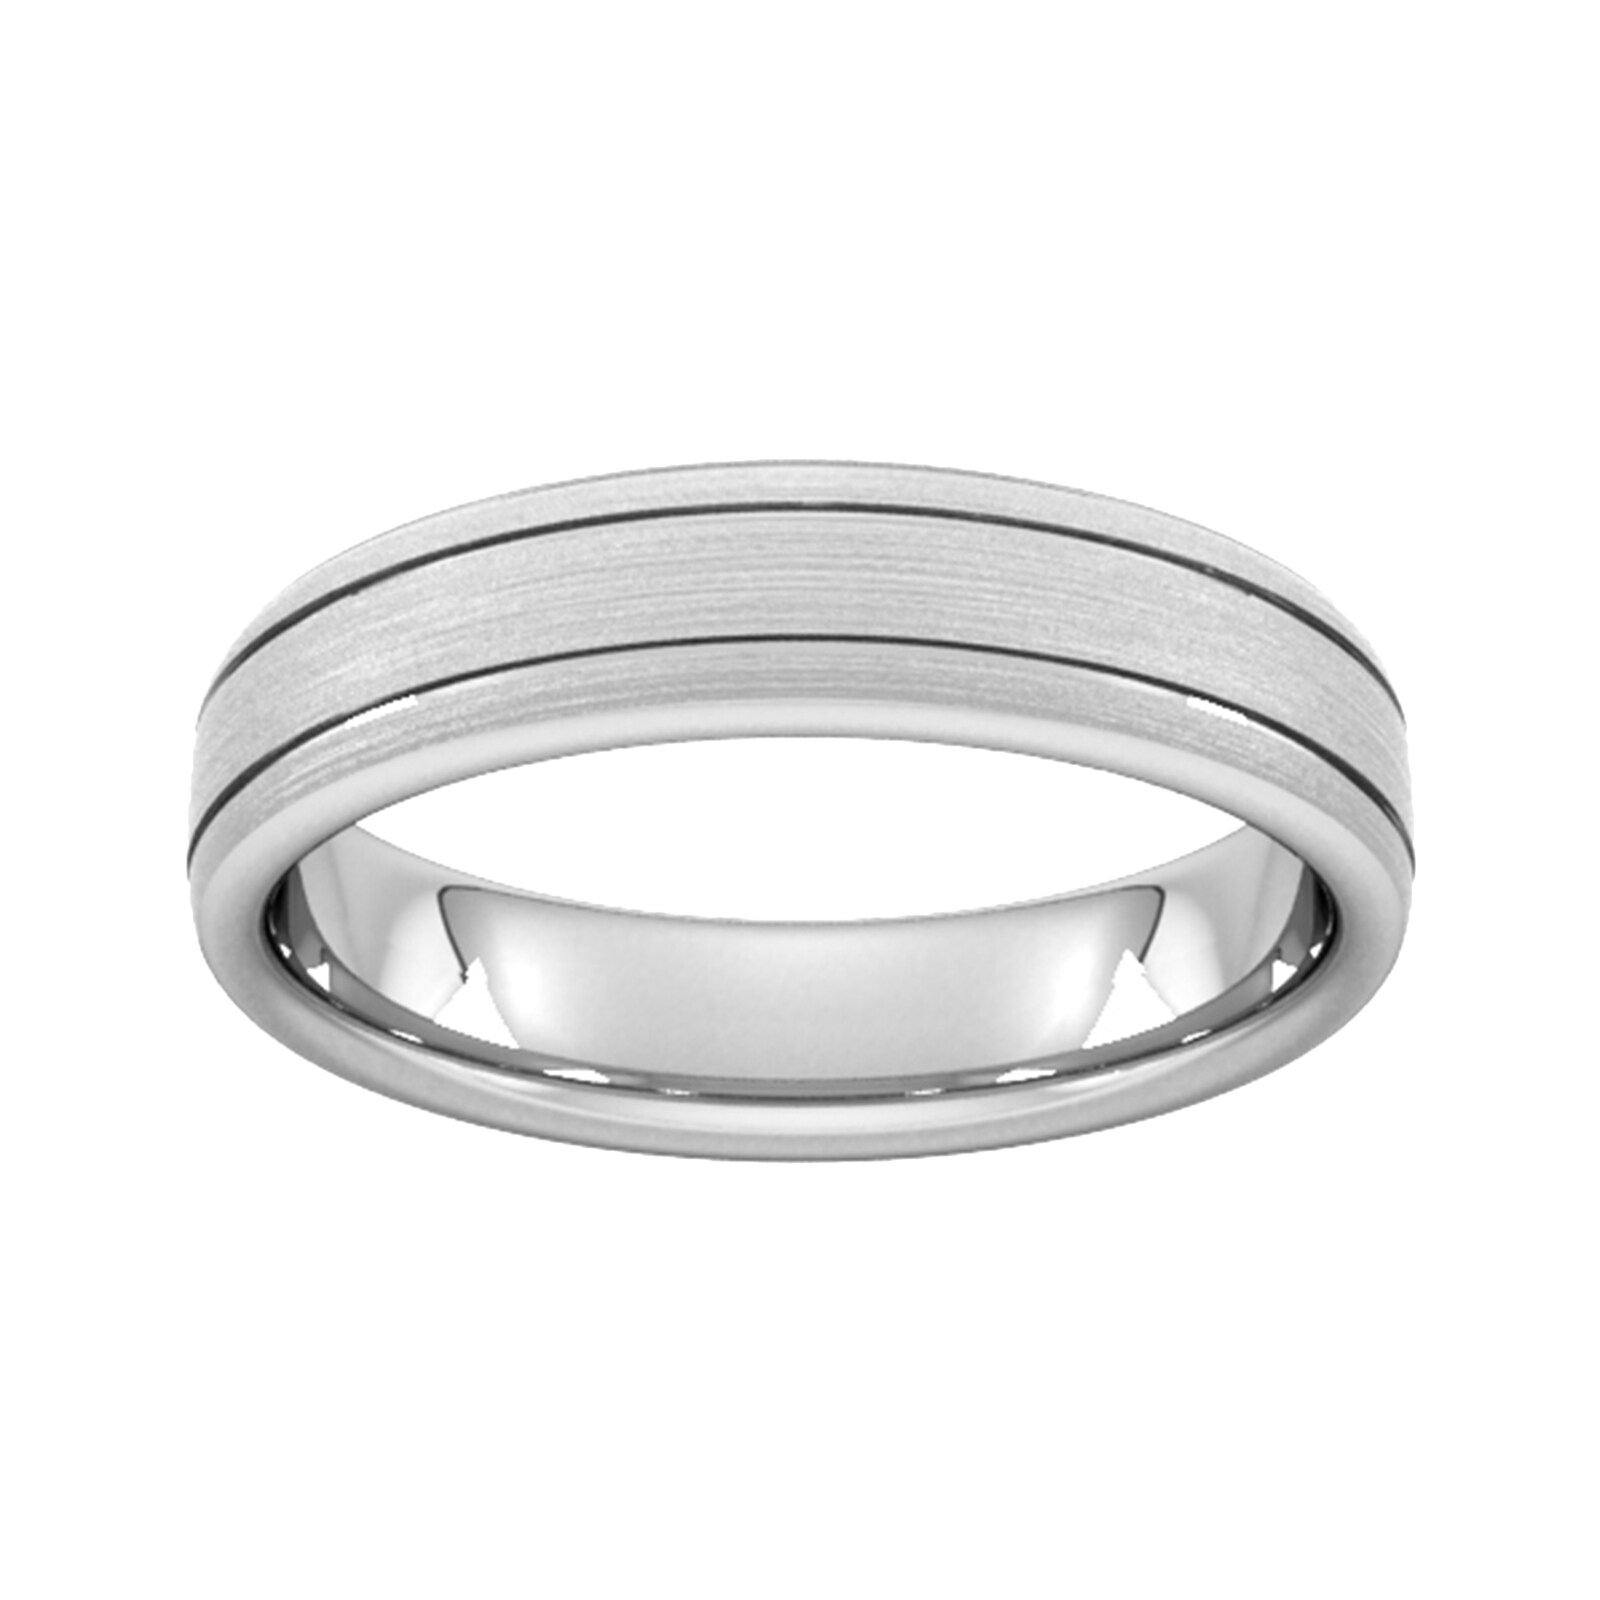 5mm Slight Court Standard Matt Finish With Double Grooves Wedding Ring In 950 Palladium - Ring Size J